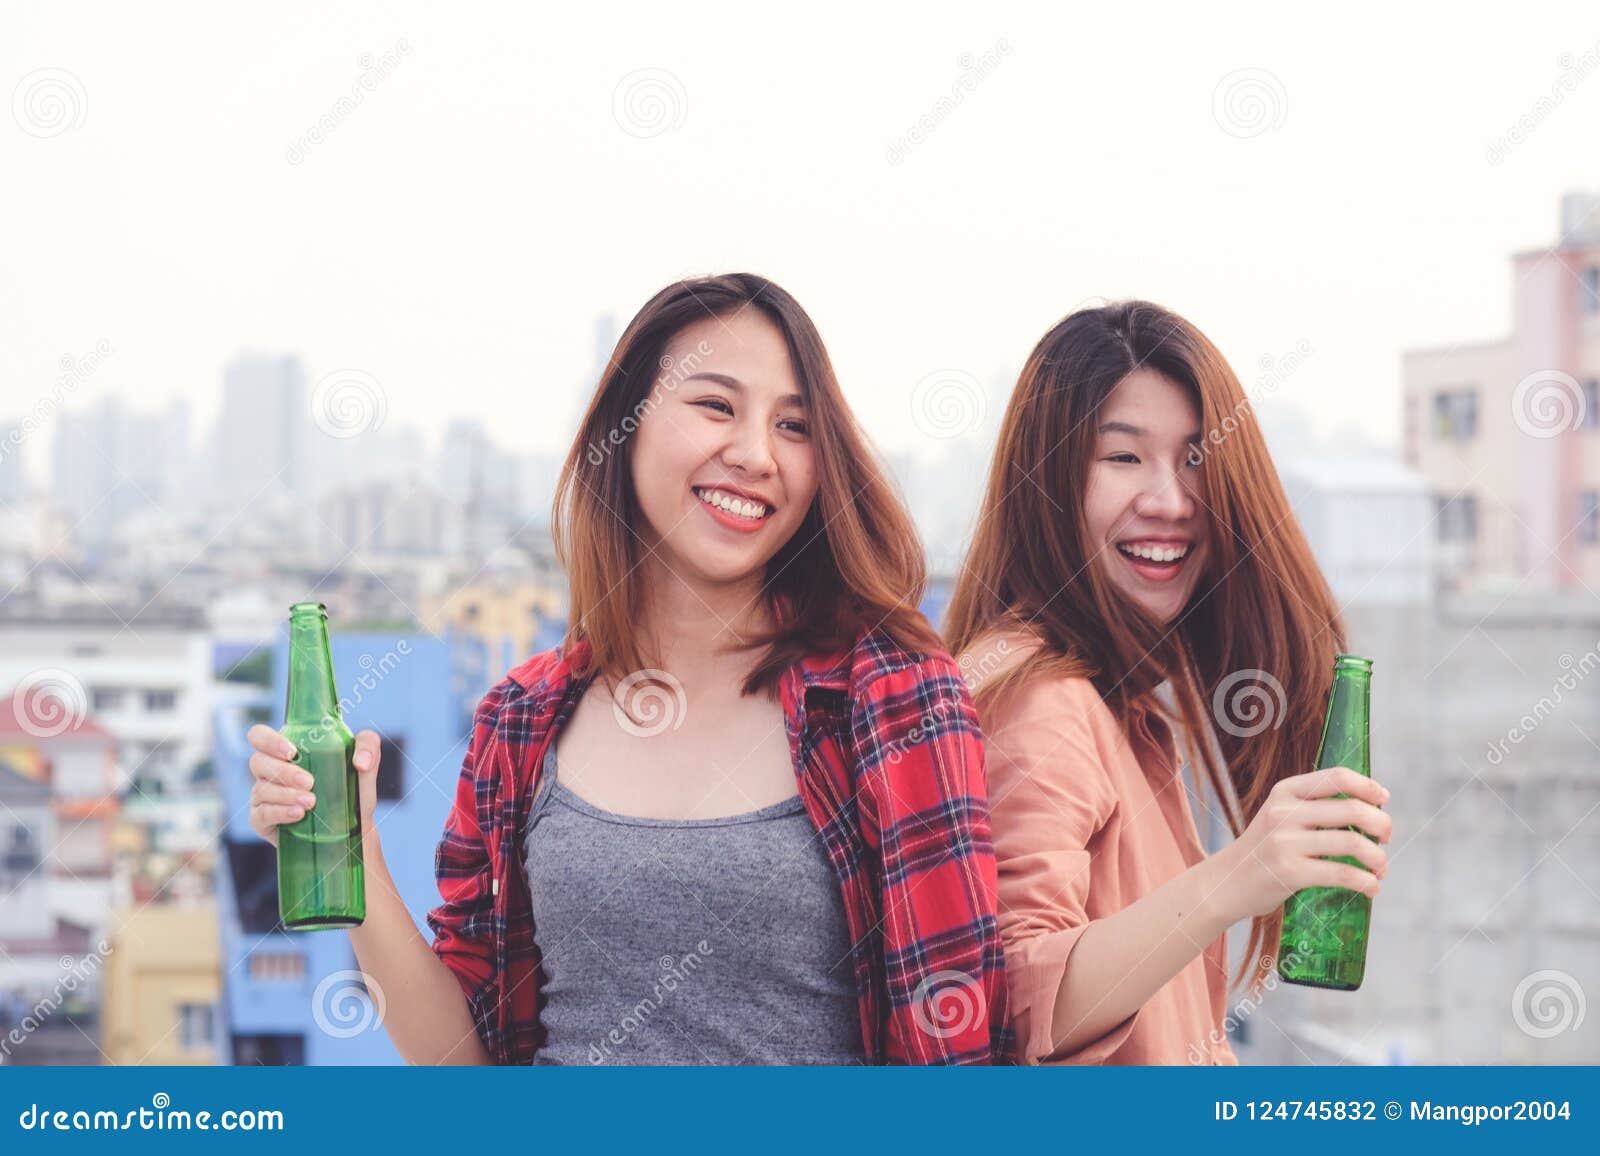 woman outdoor Asian couple